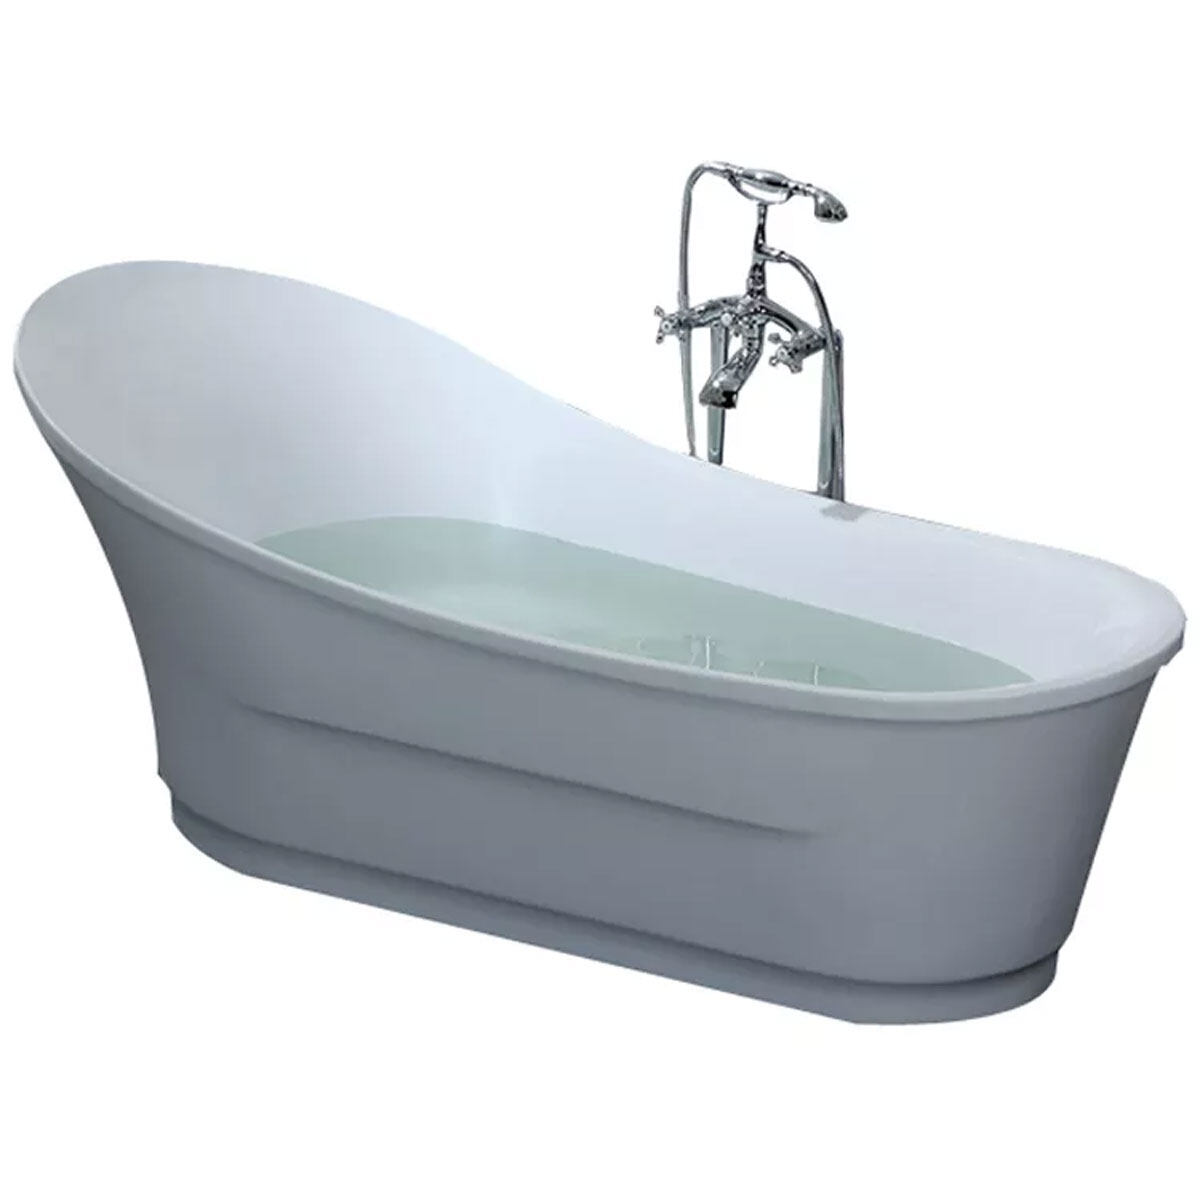 bathtub wholesale suppliers, bathtubs factory direct, bathtubs for sale online, bathtubs lowes for sale, bathtubs wholesale